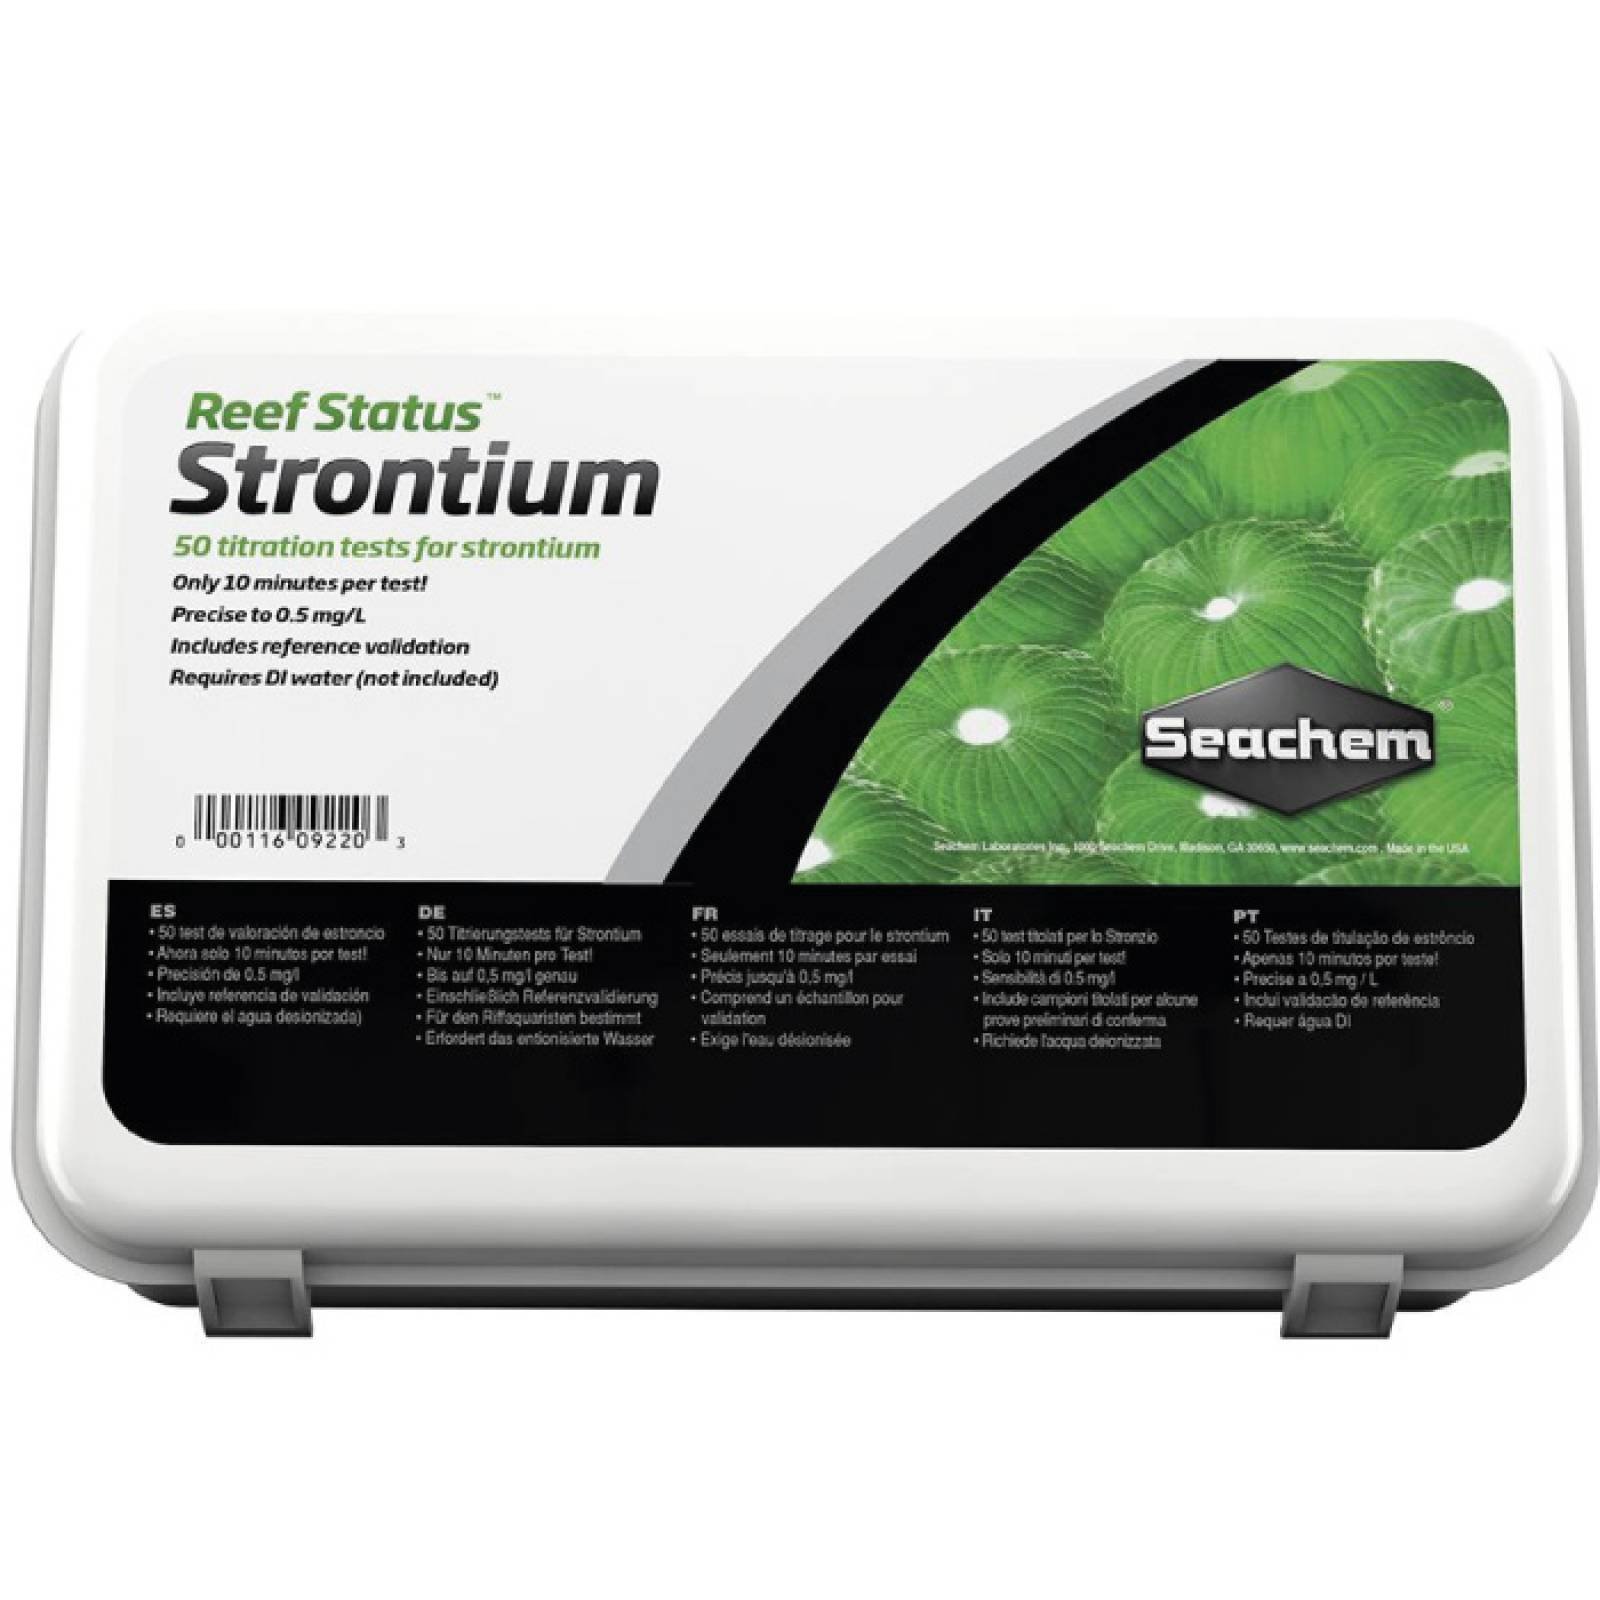 Seachem Reef Status Strontium 75 Test Kit de Medición